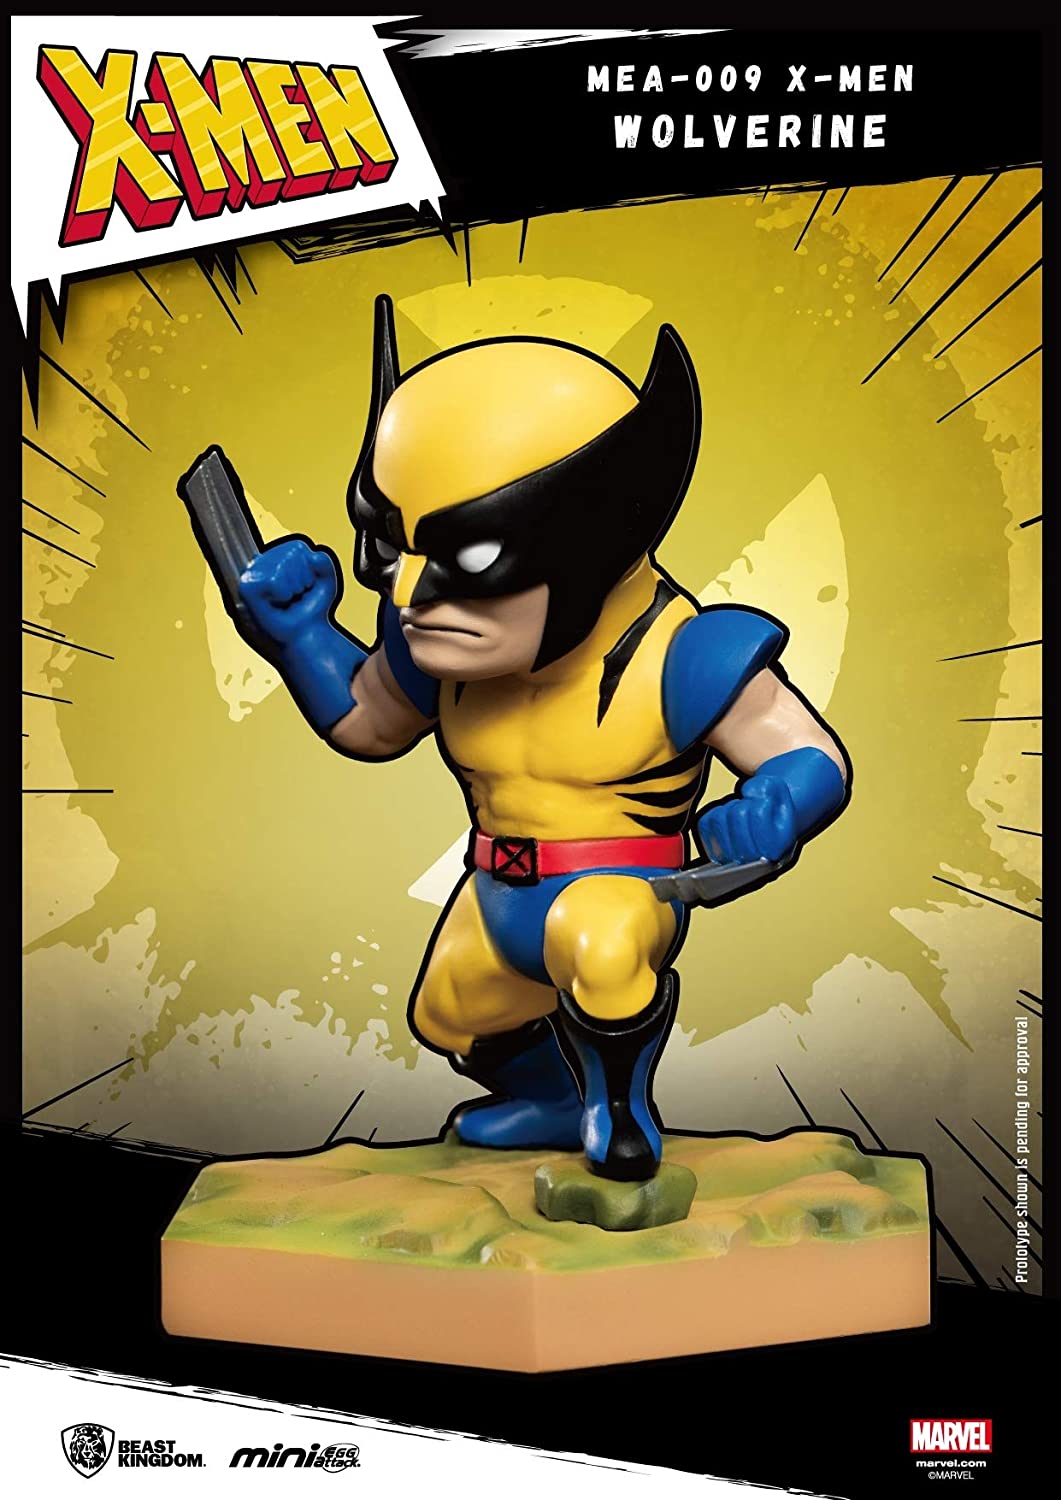 Marvel X-Men MEA-009 Wolverine PX Abb